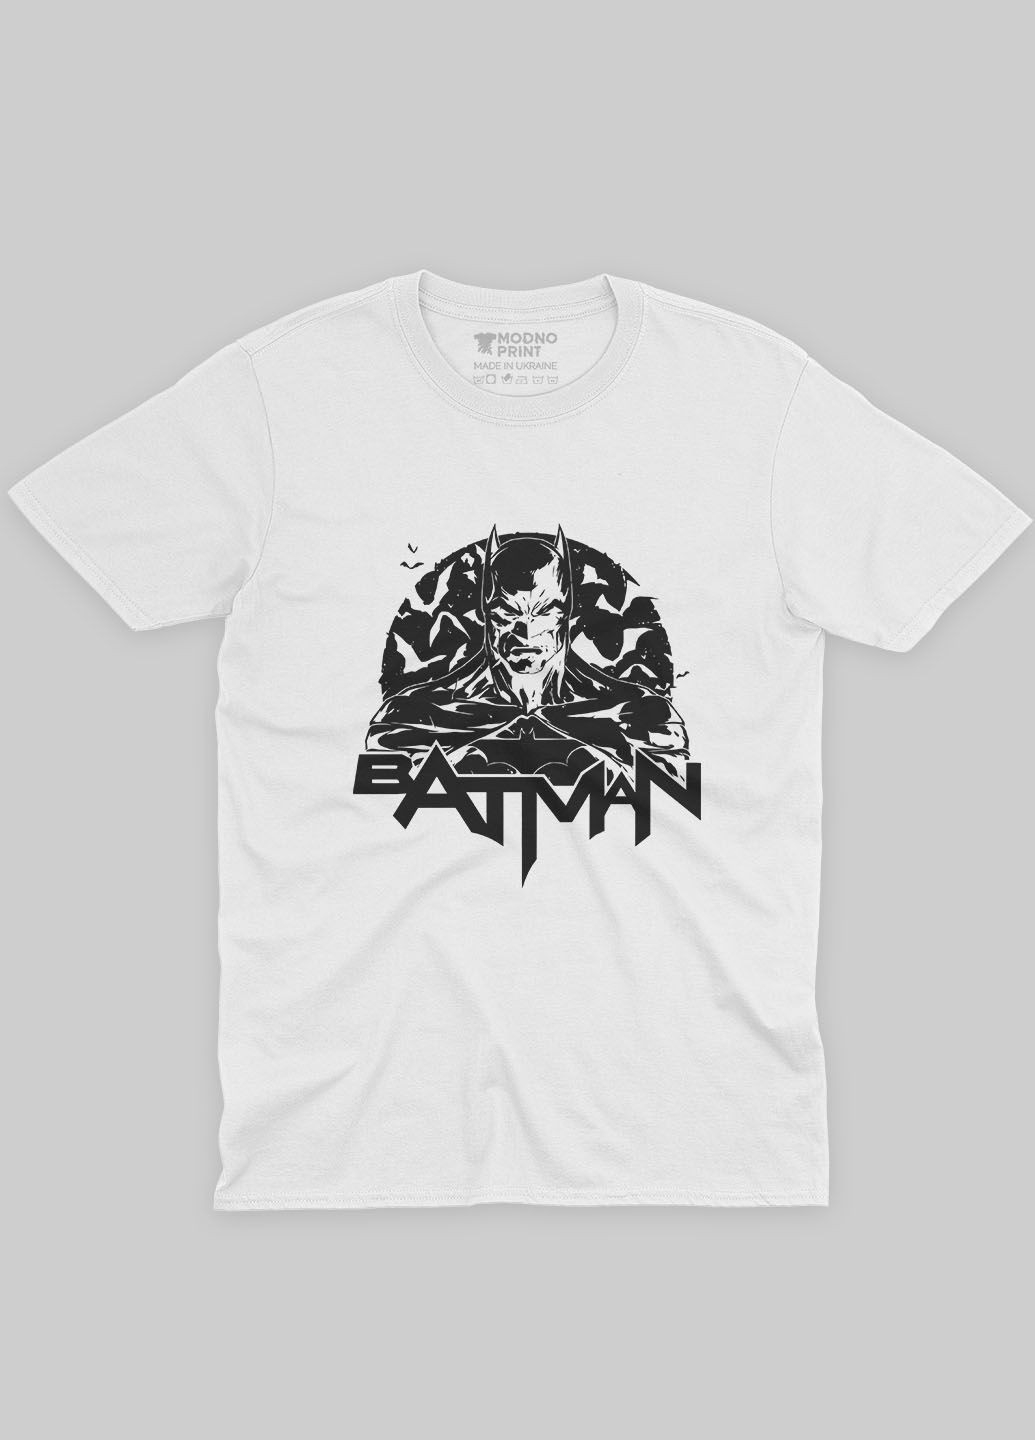 Жіноча футболка з принтом супергероя - Бетмен (TS001-1-WHI-006-003-012-F) Modno - (292119030)